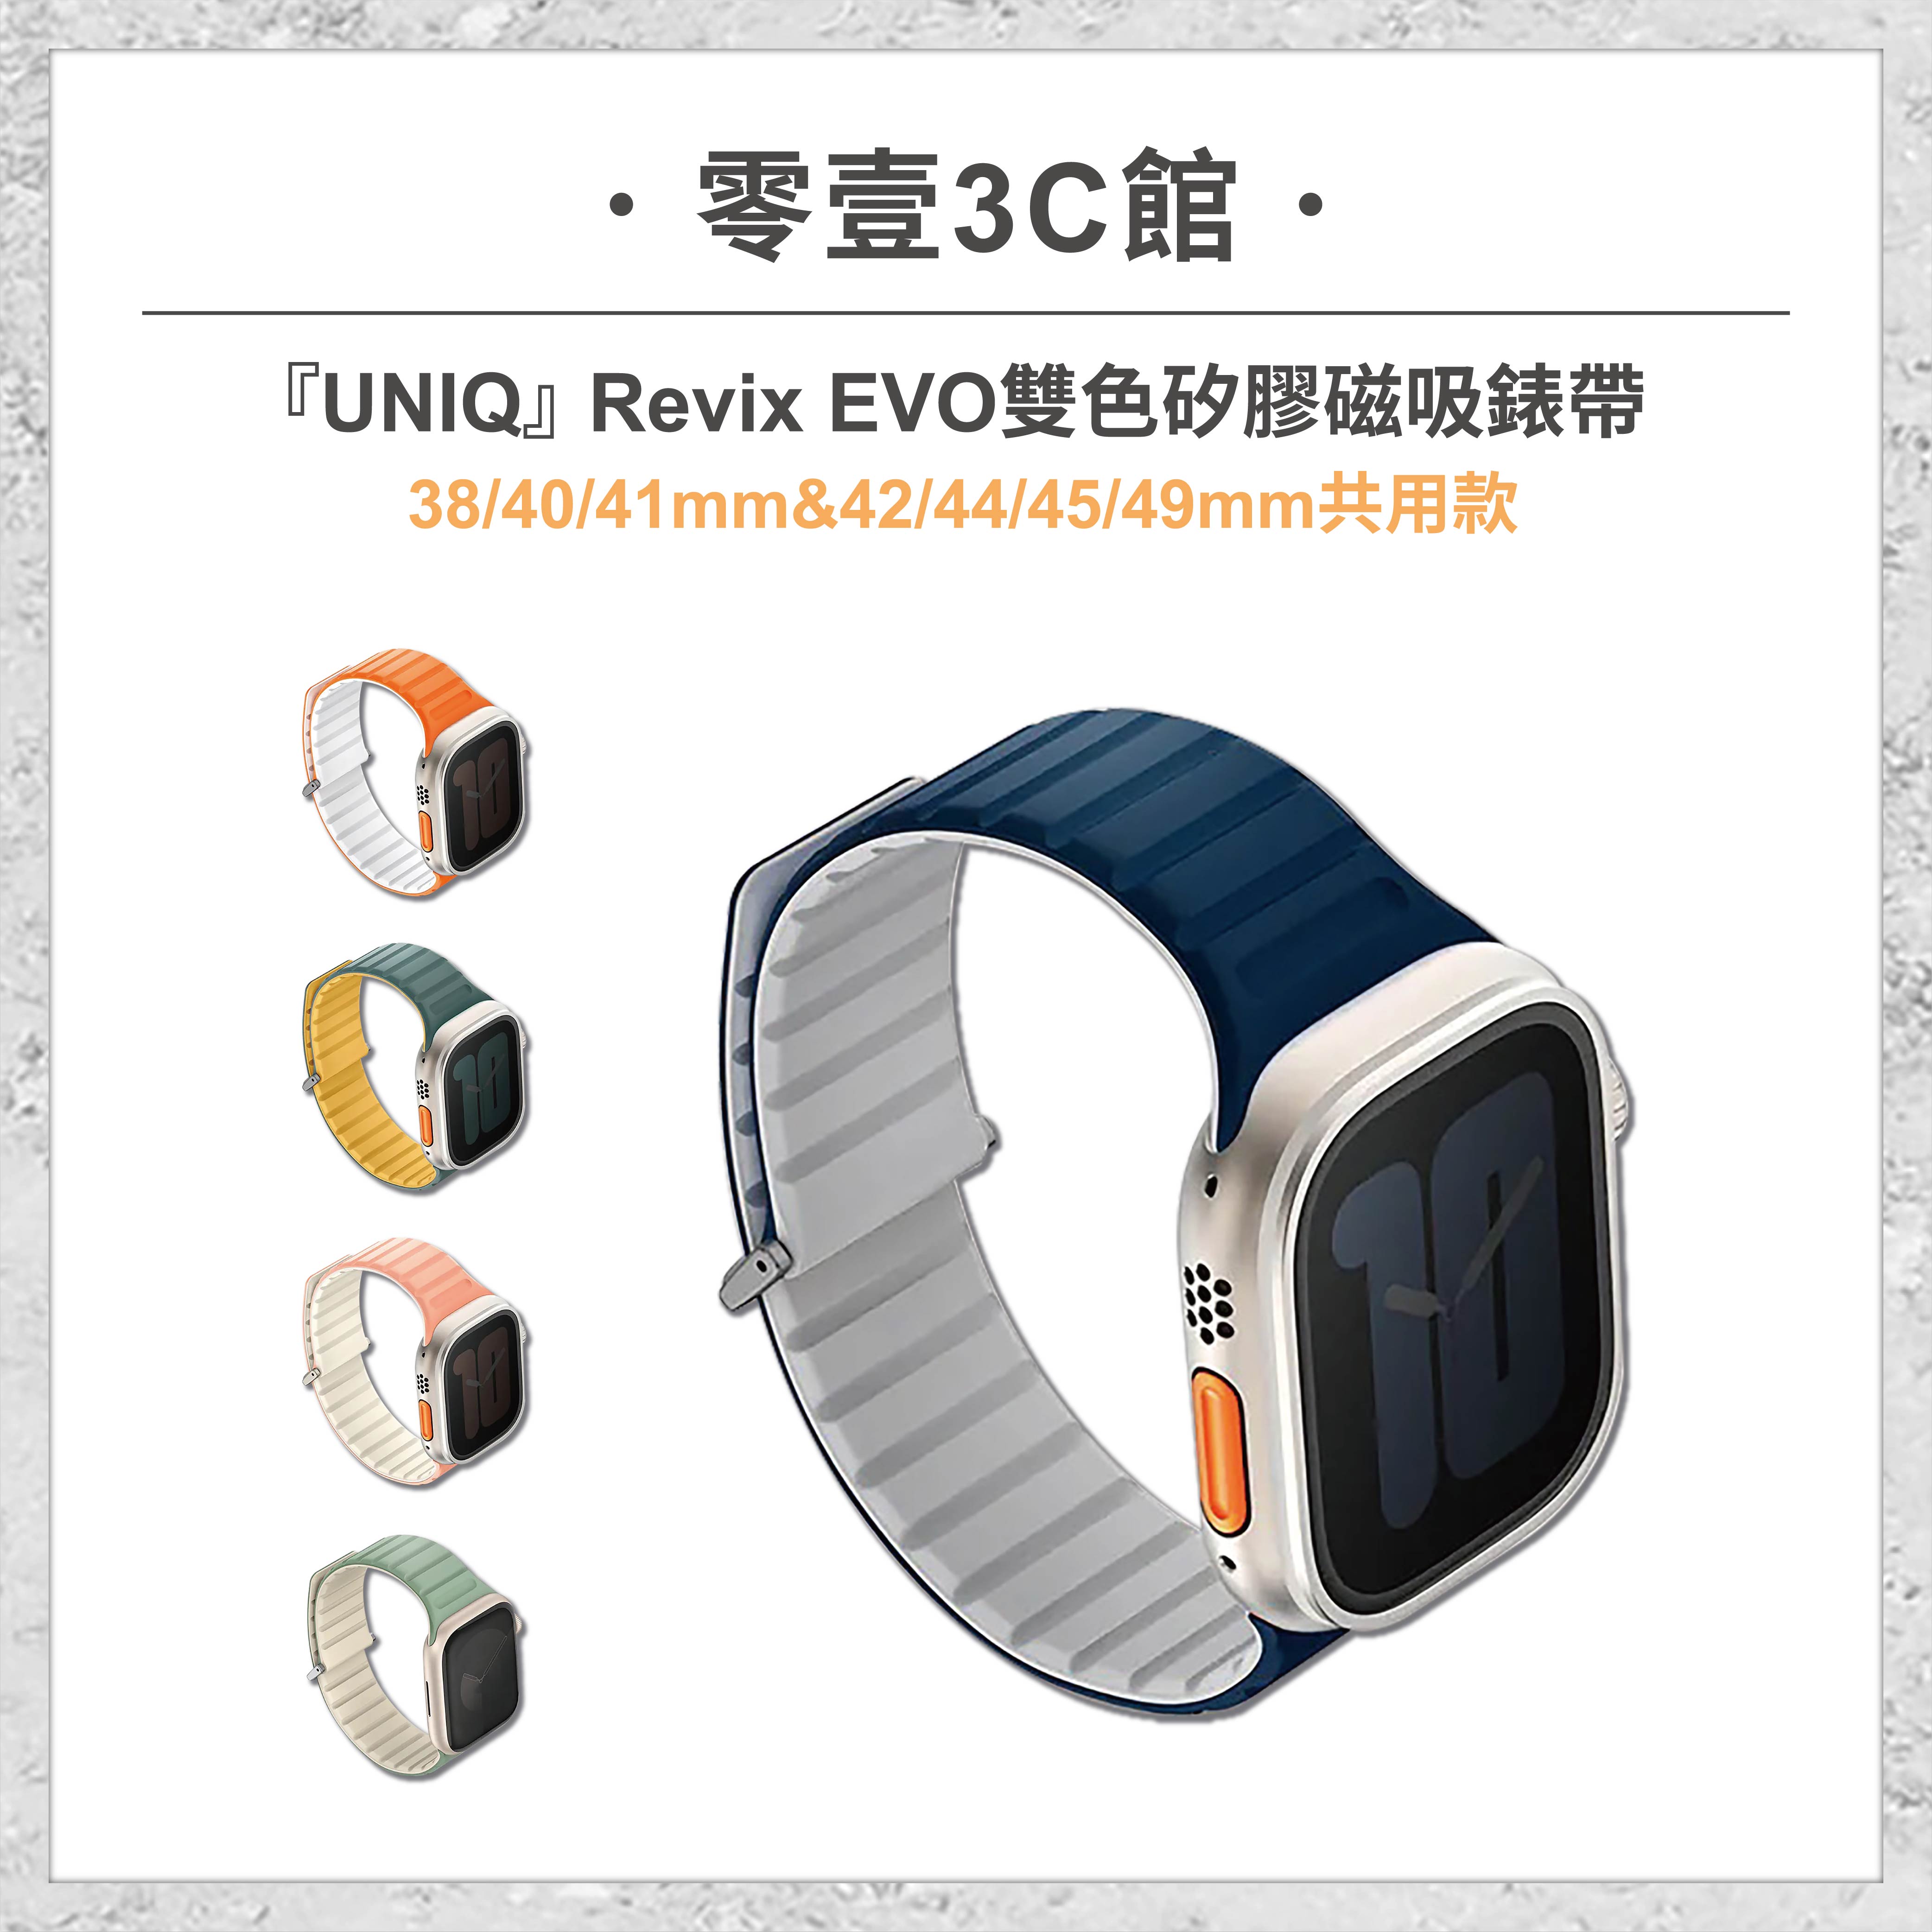 『UNIQ』Revix EVO雙色矽膠磁吸錶帶for Apple Watch 38/40/41&42/44/45/49mm共用款 手錶錶帶 雙色錶帶